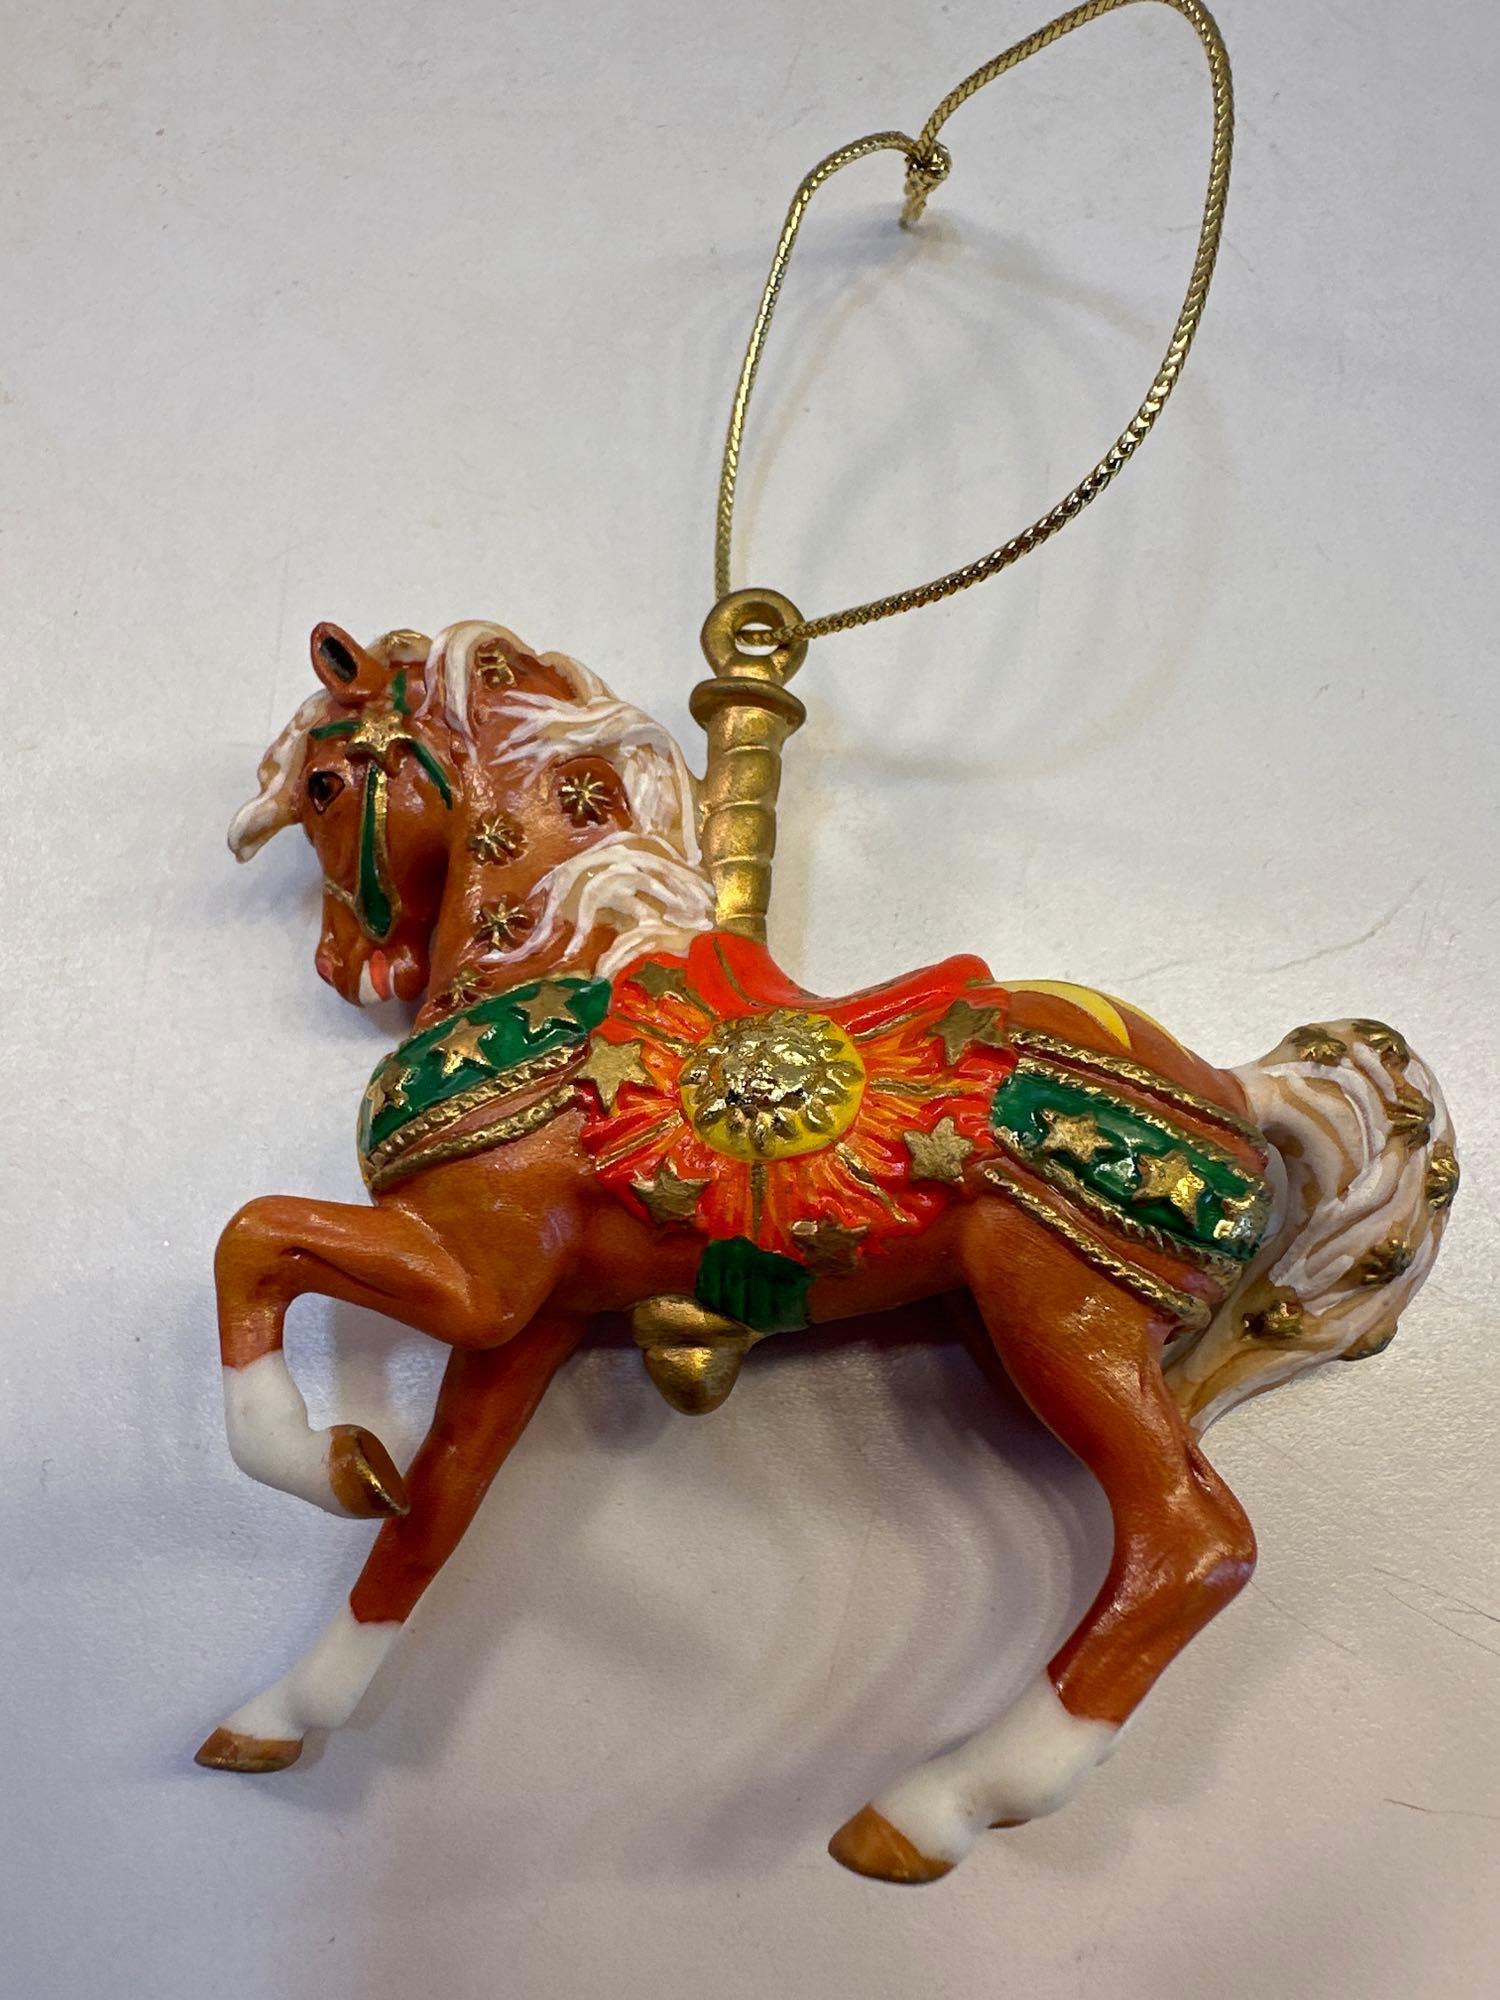 1Porcelain Carousel Horse Ornaments / 2 Hard Plastic Carousel Horse Ornaments